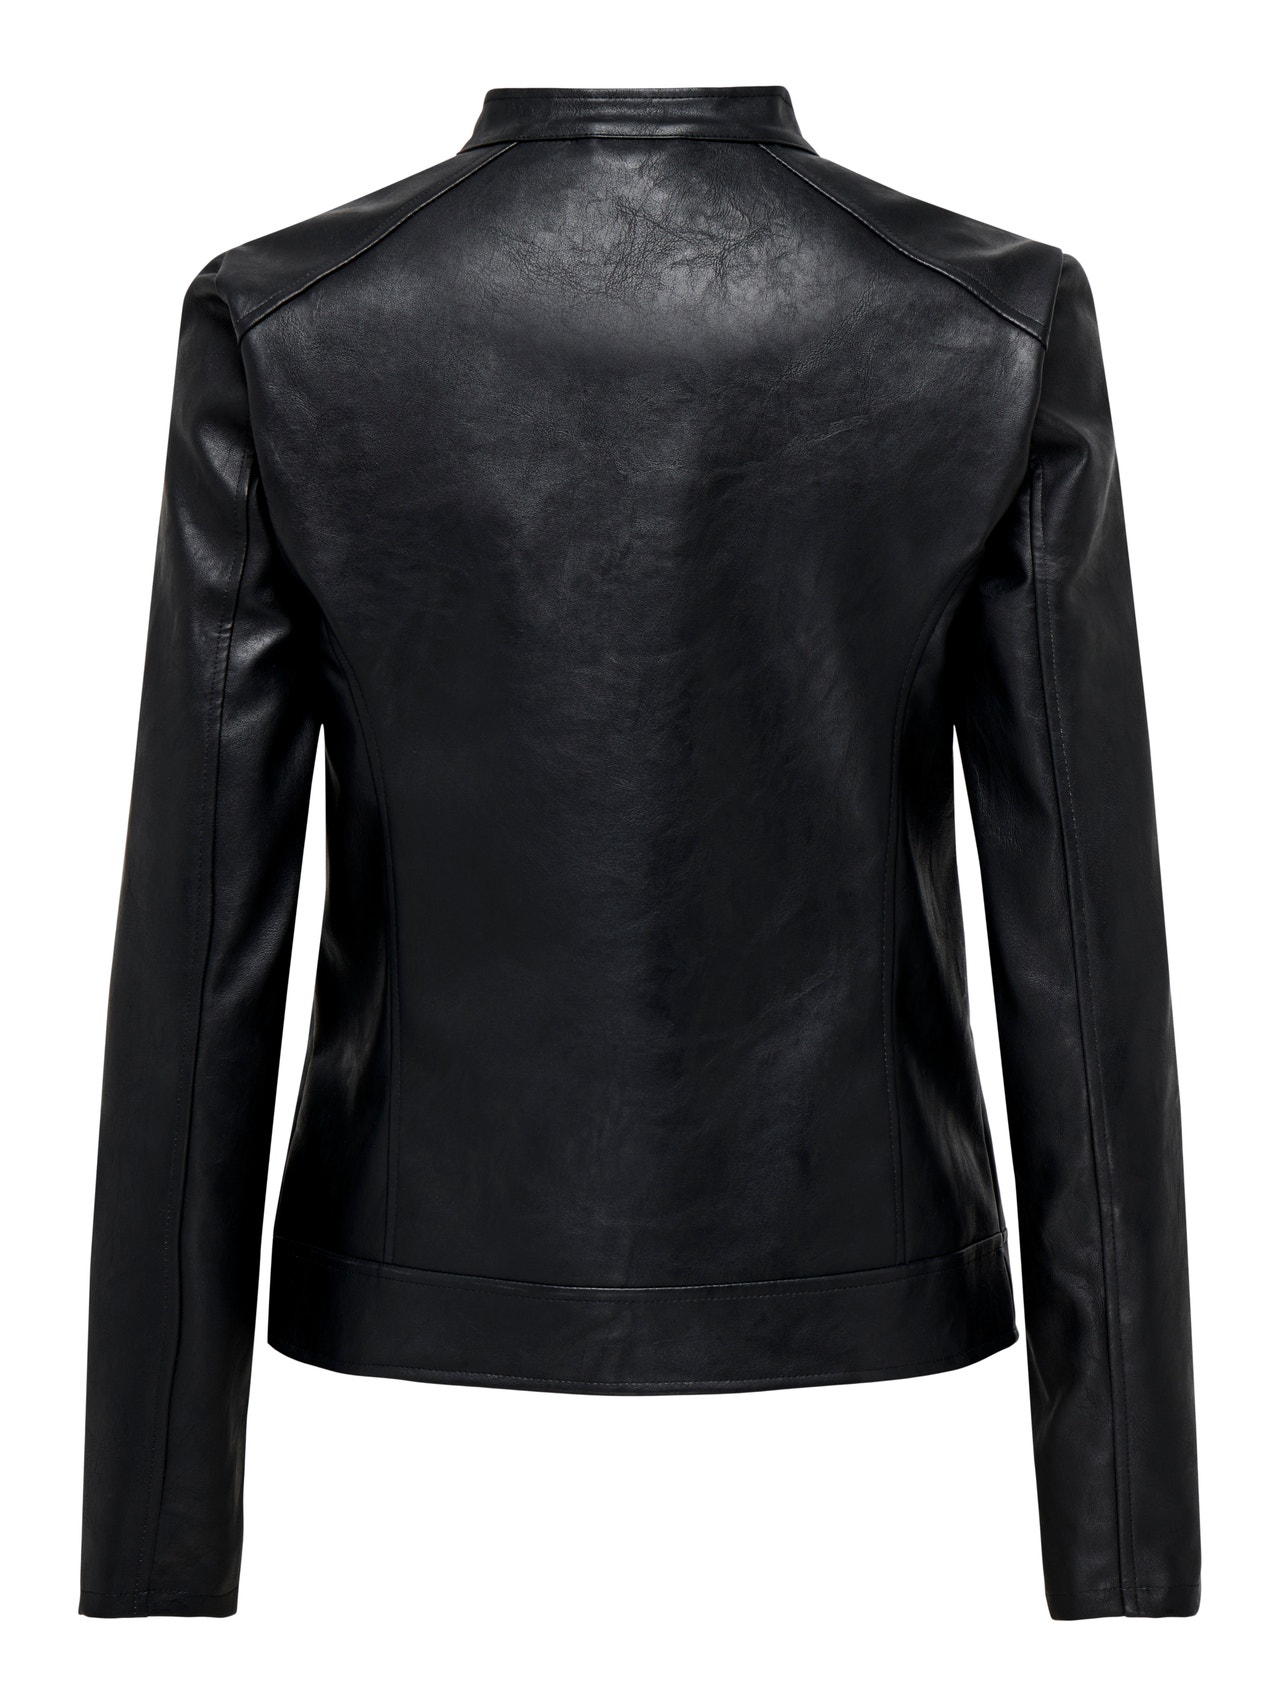 ONLY Zipper Faux Leather Jacket -Black - 15241382